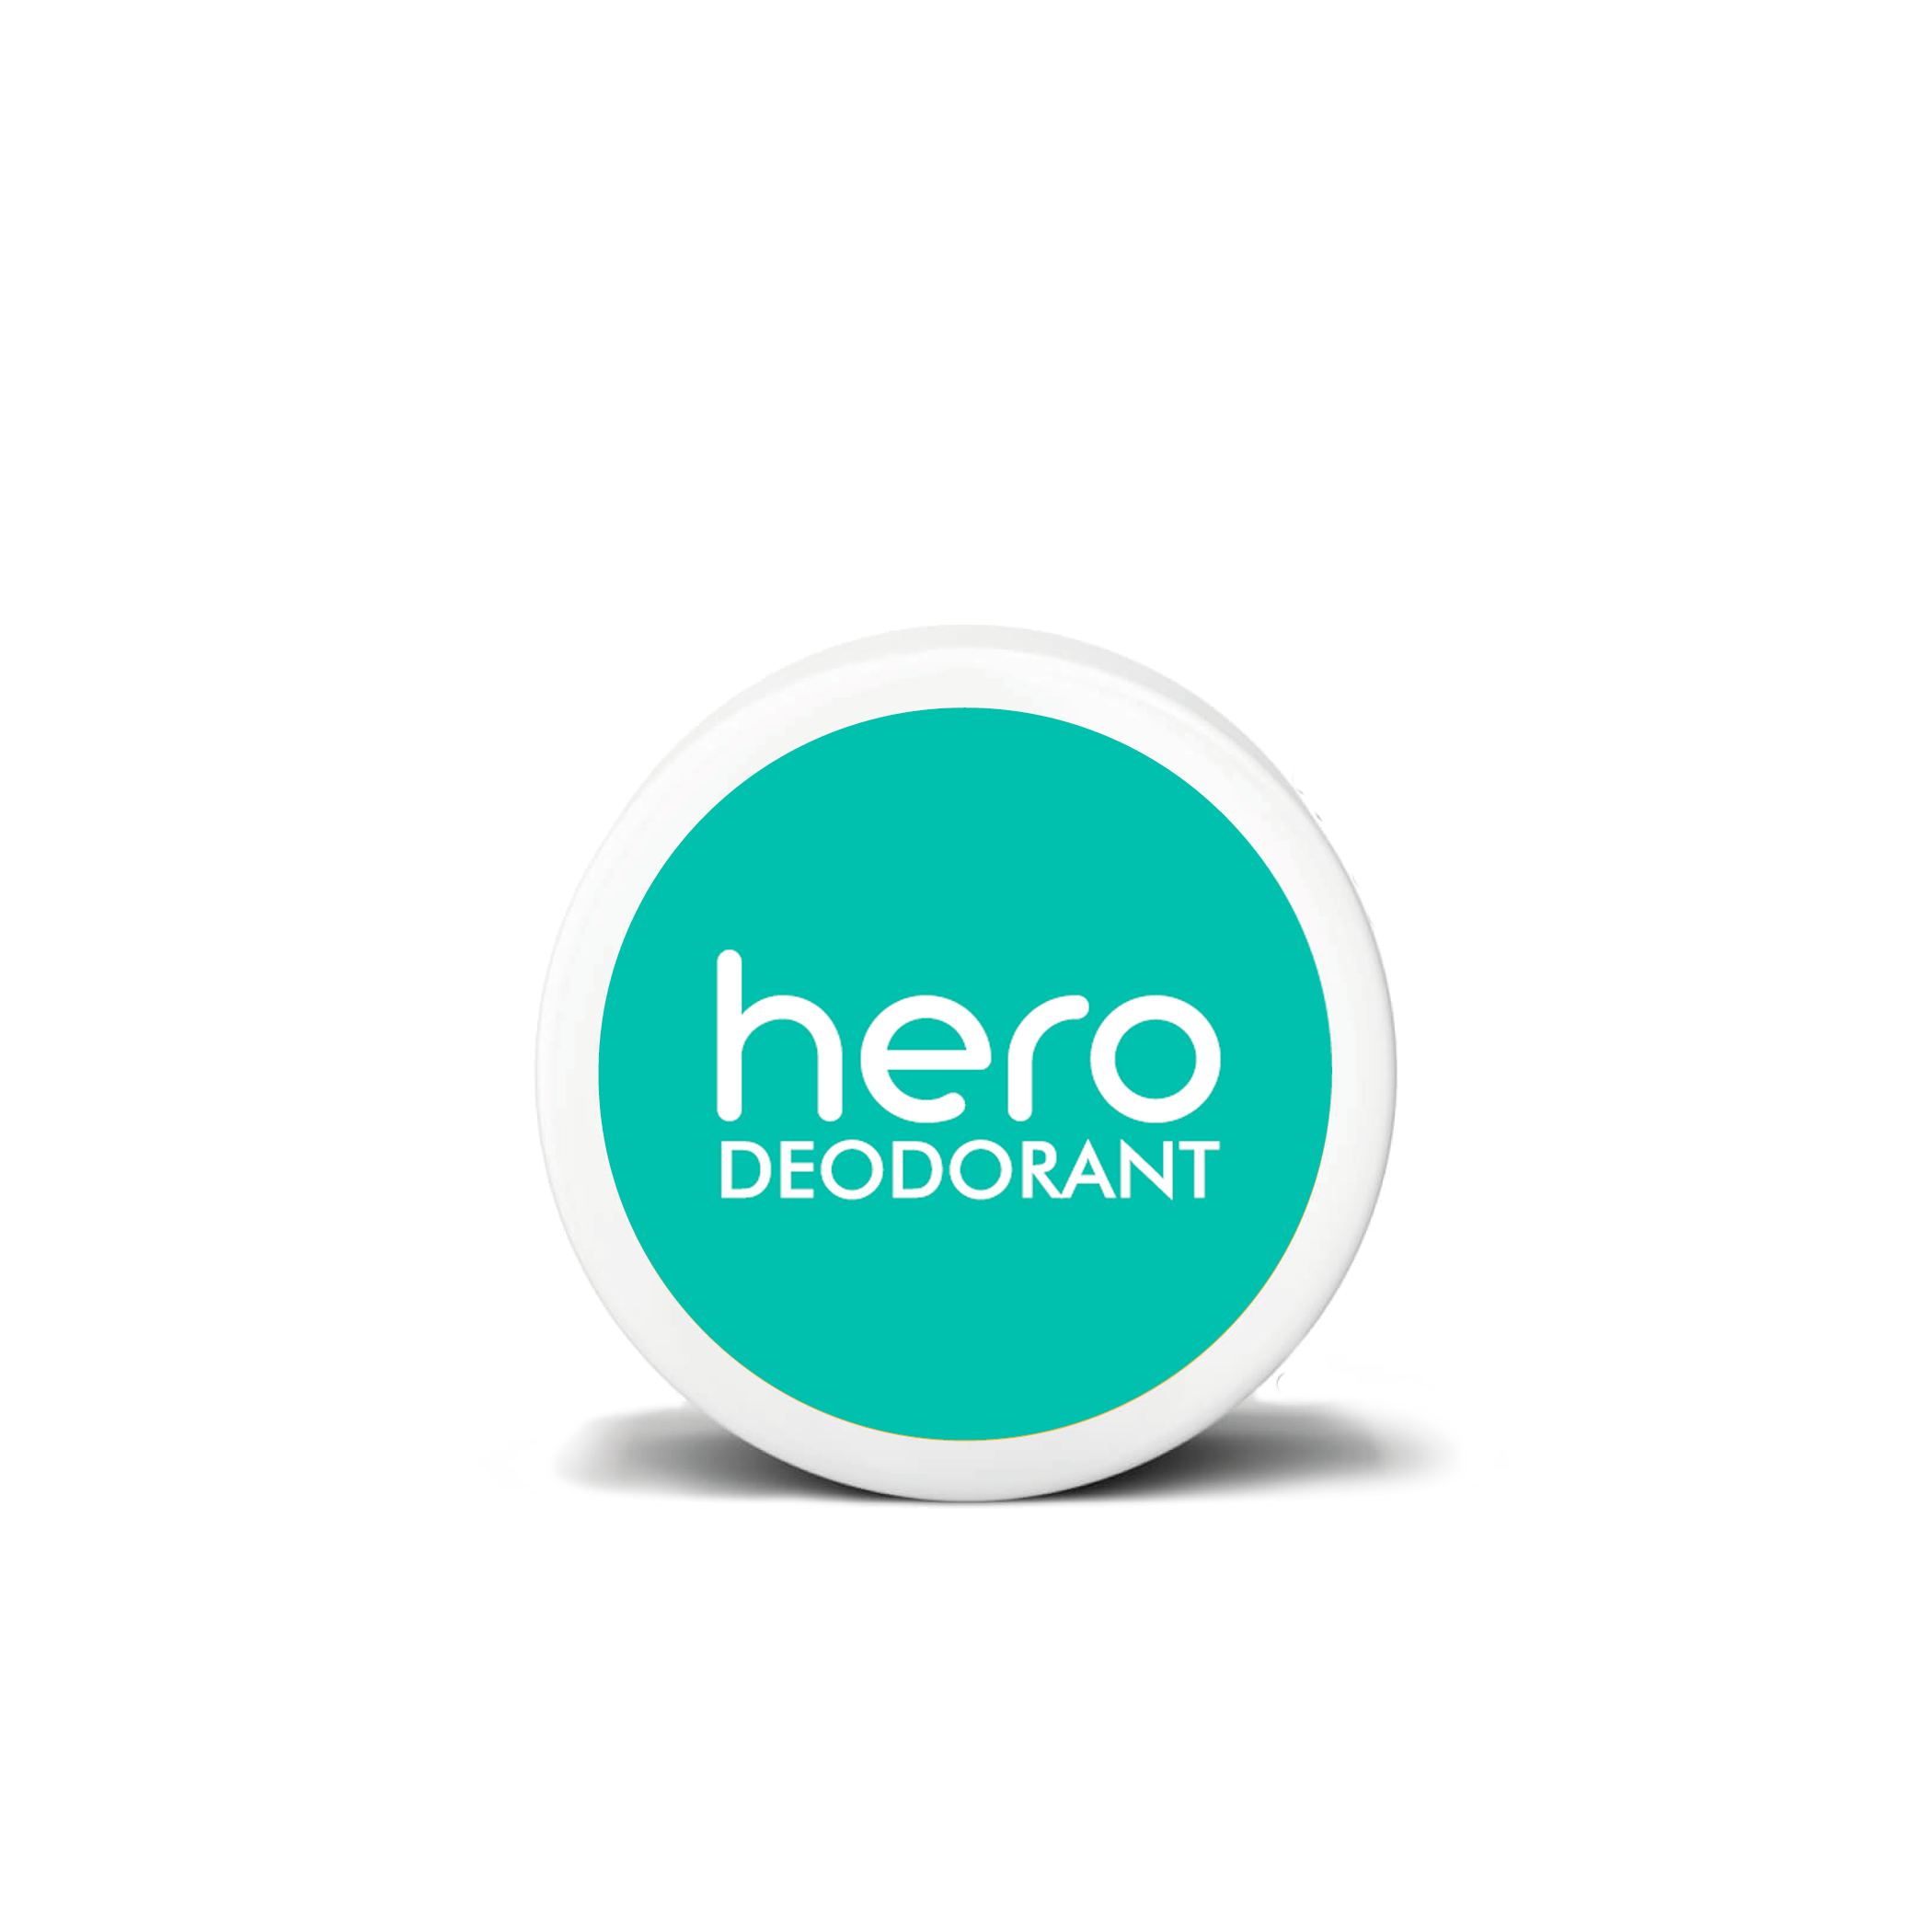 Hero deodorant